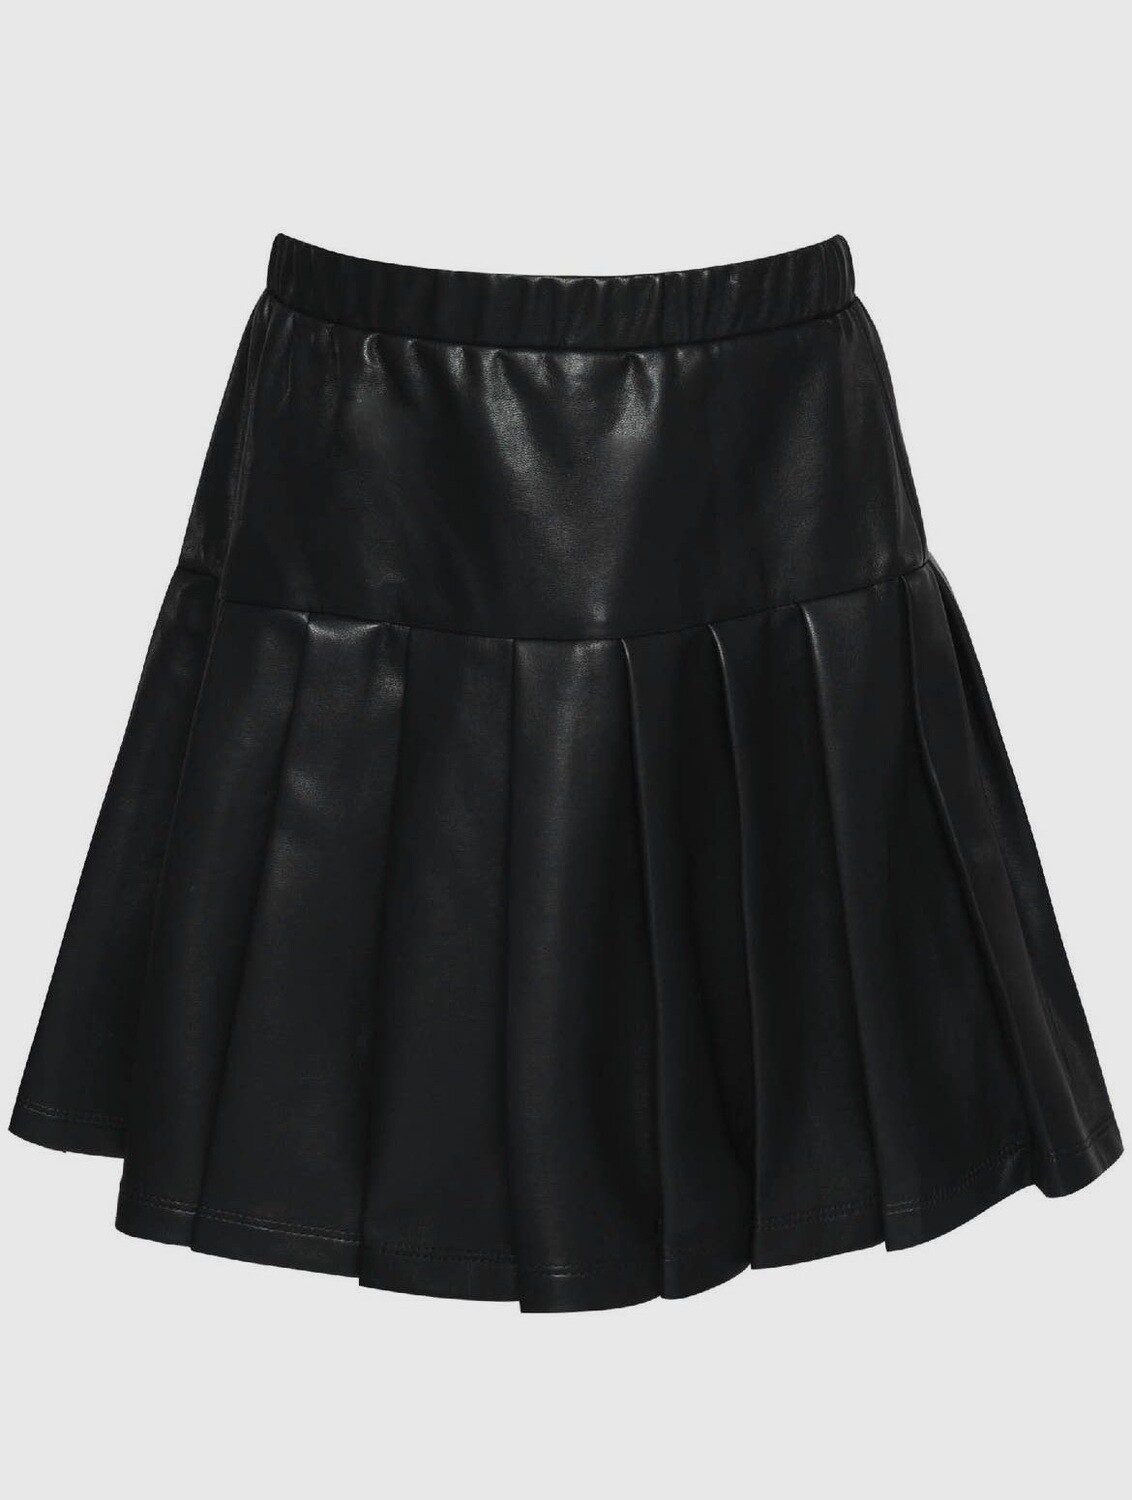 Hannah Banana Girls Black Faux Leather Skirt 134